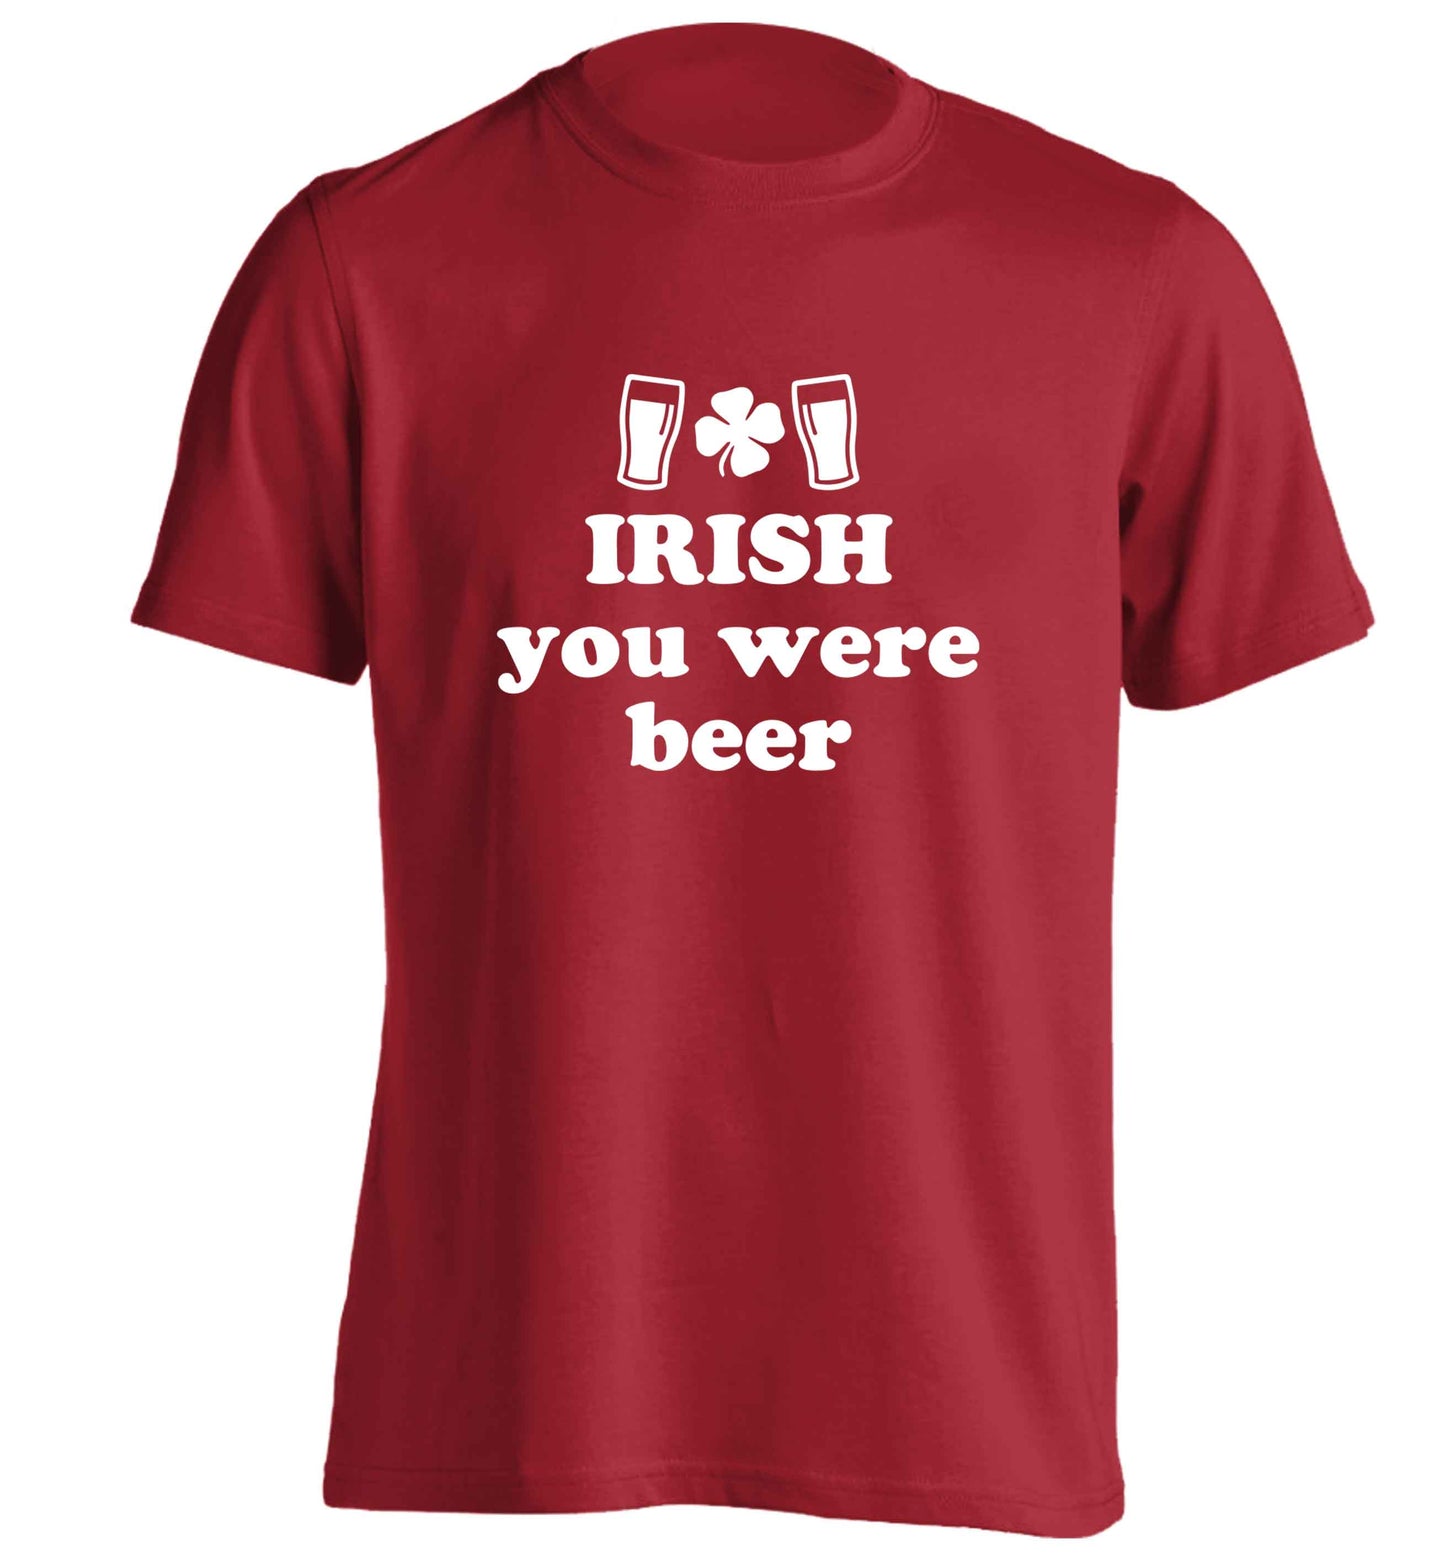 Irish you were beer adults unisex red Tshirt 2XL